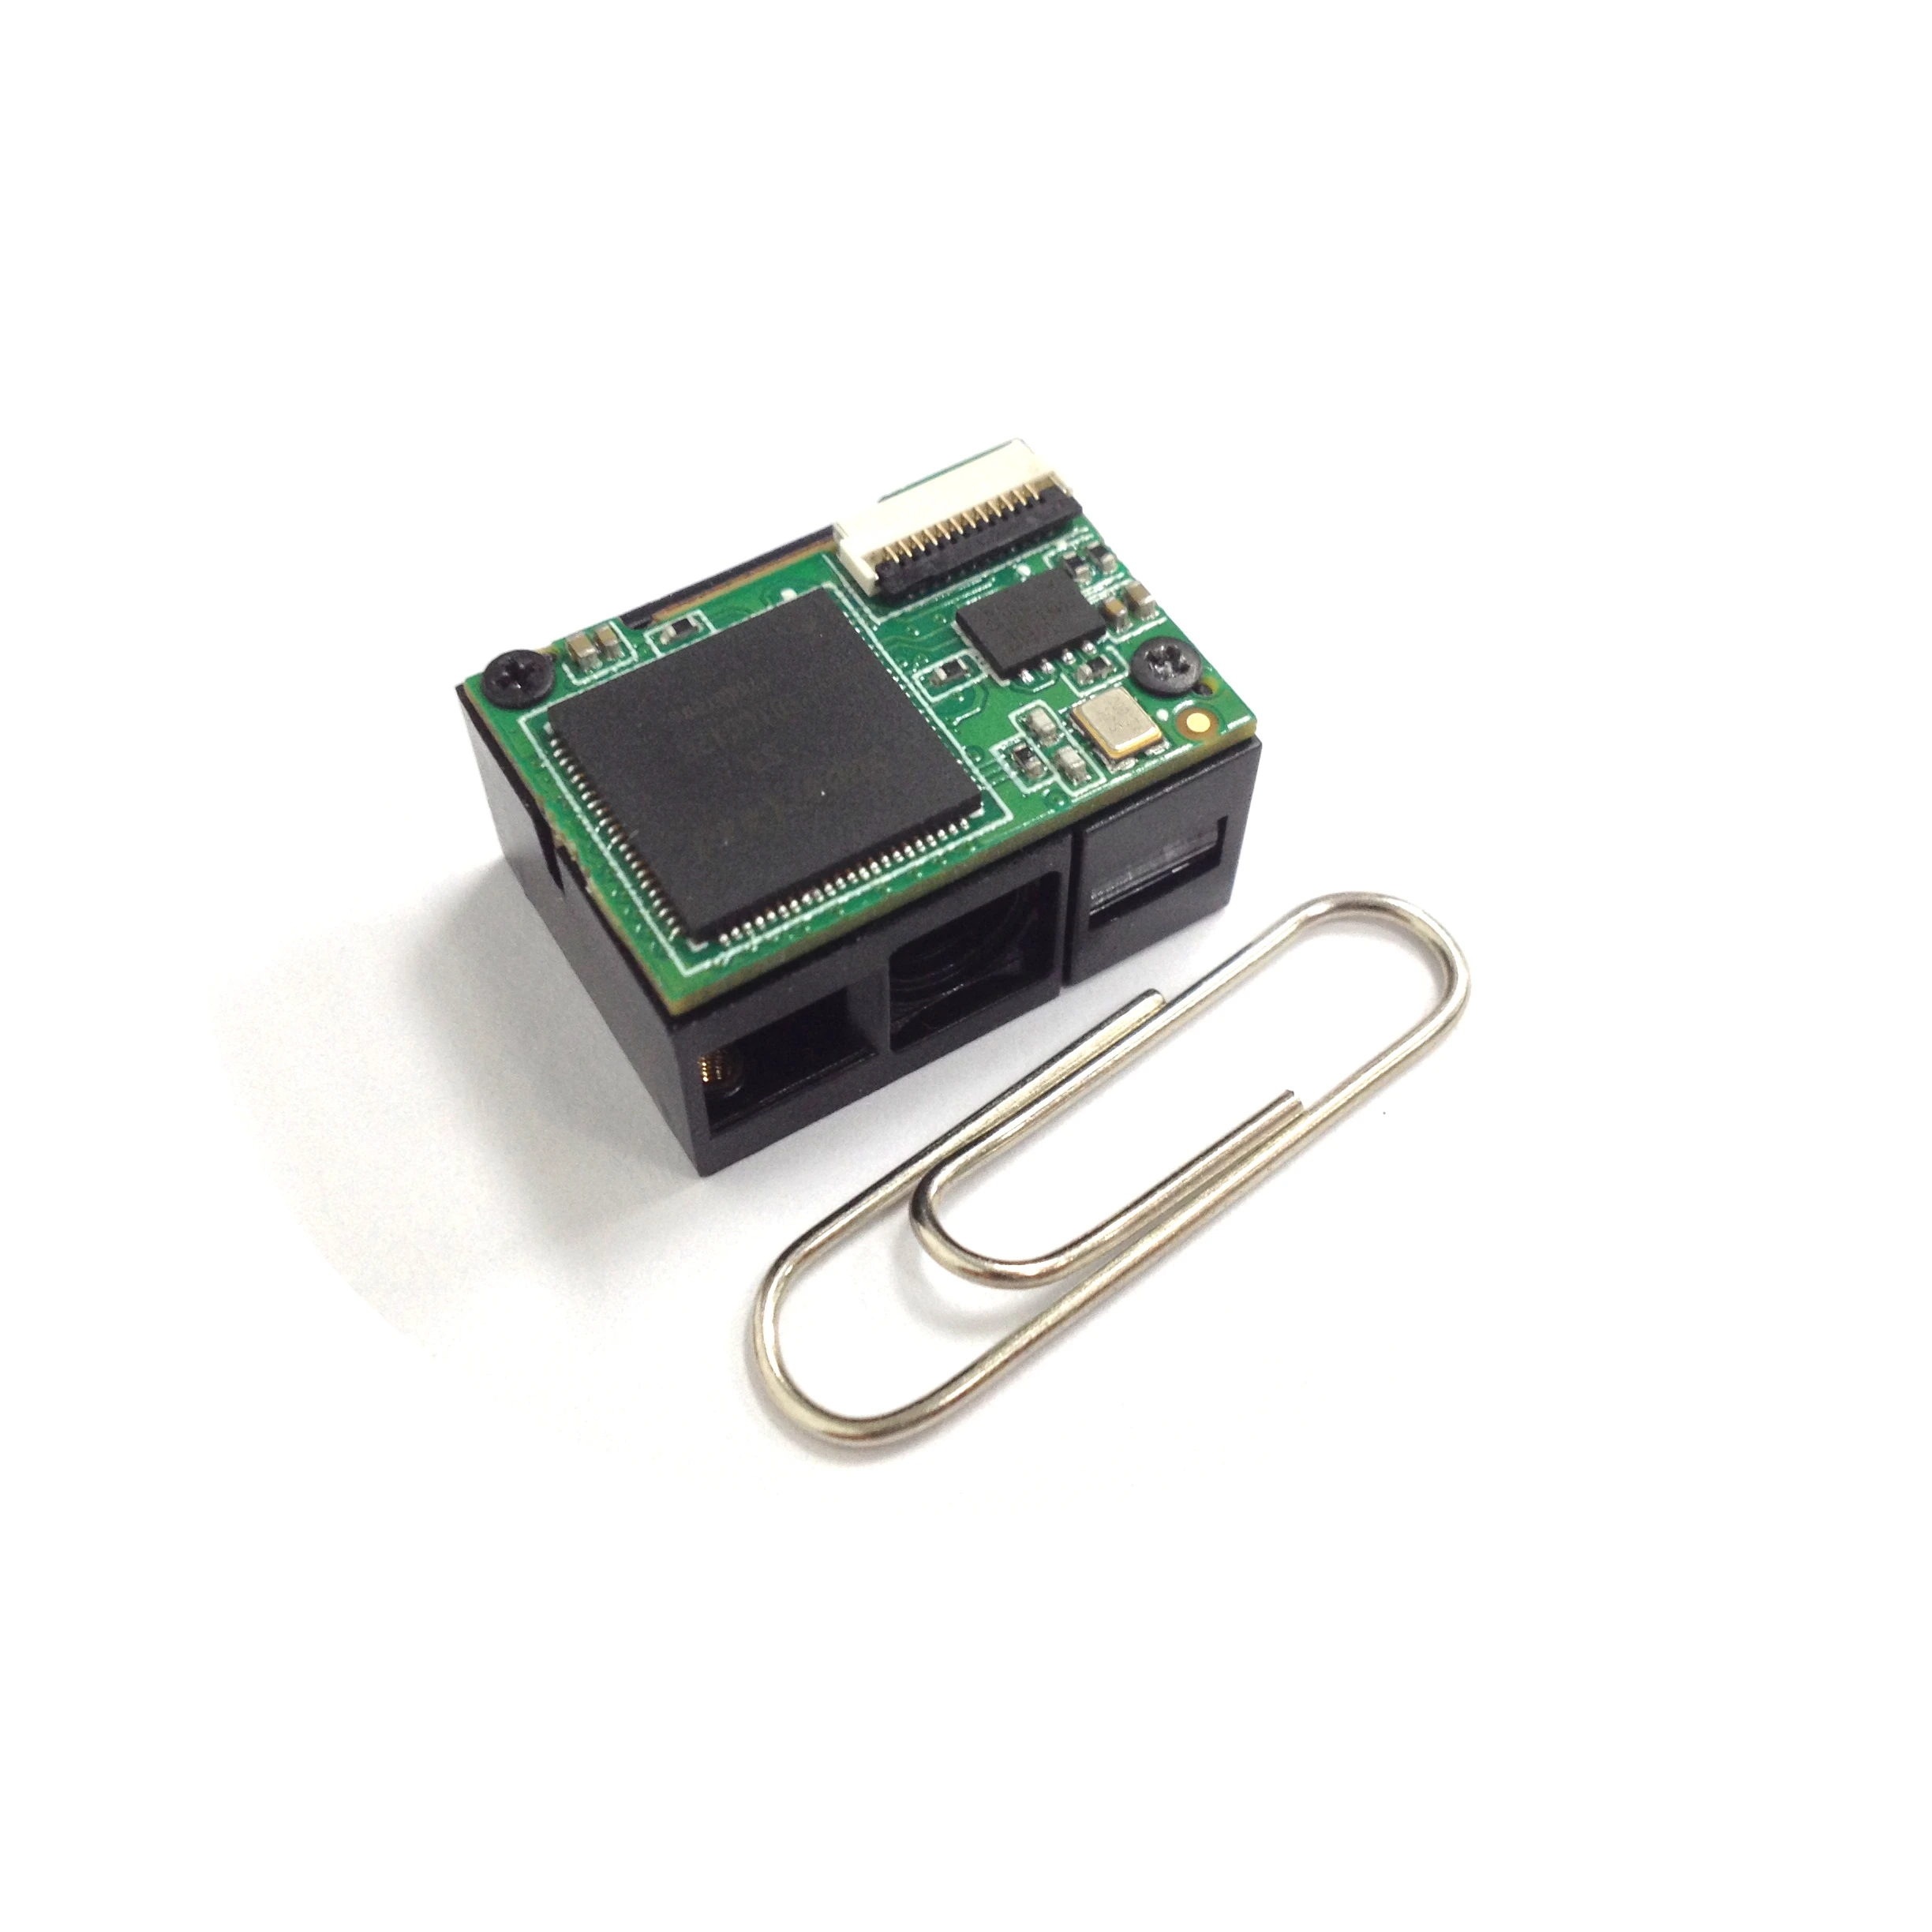 SuperLead 2102 DIY bar code scanner embedded programmable mini TTL232 USB 1D CCD linear Image engine scanning module